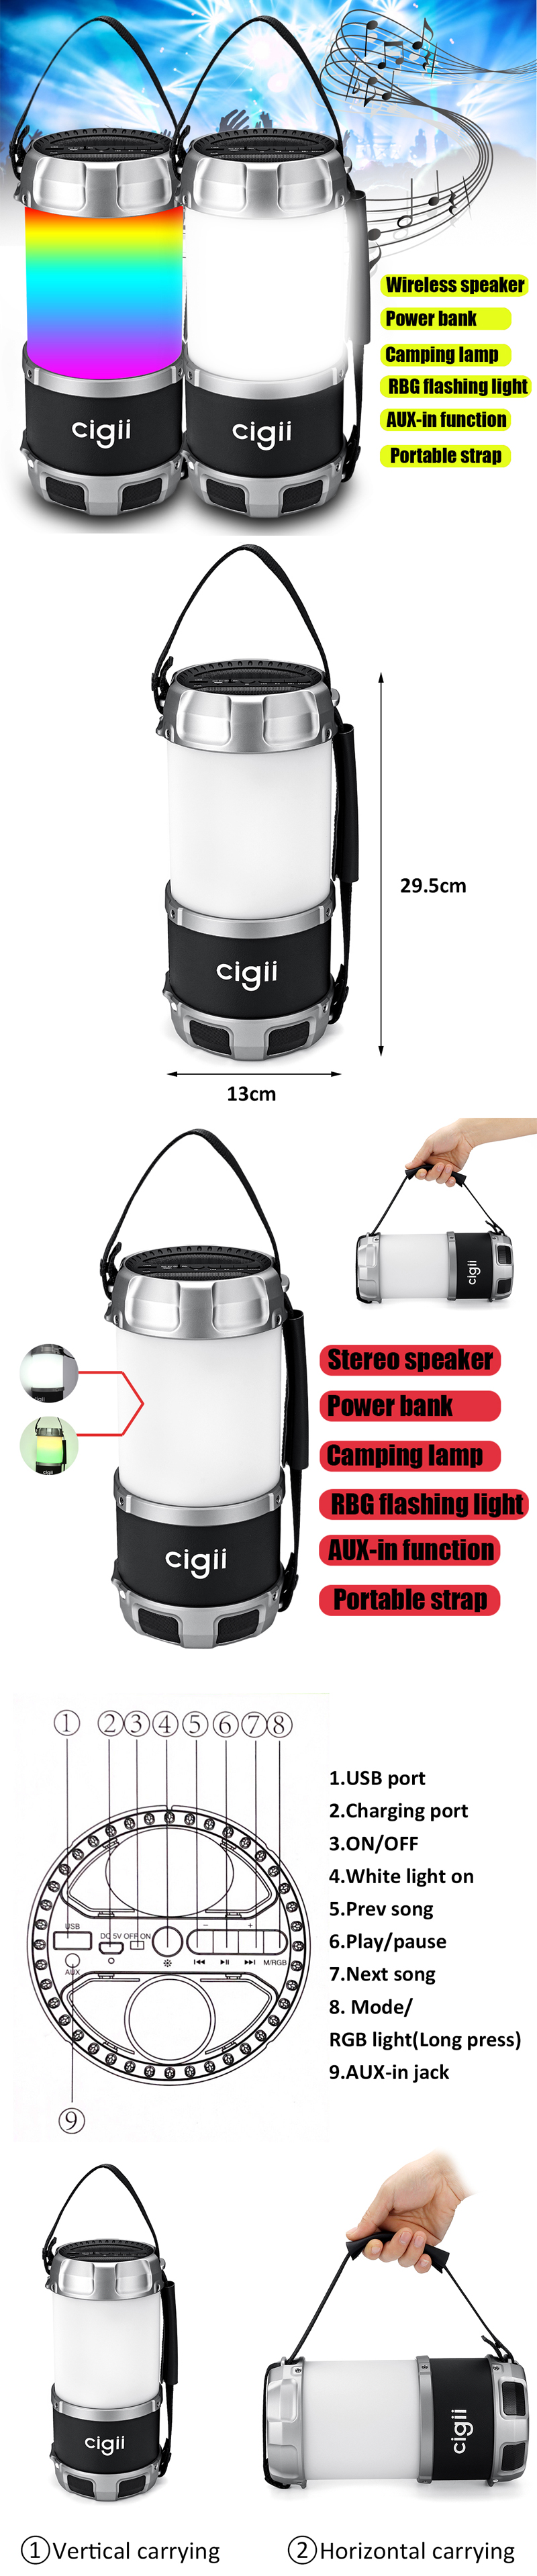 BIKIGHT-Wireless-bluetooth-Speaker-Outdoor-Camping-Hunting-Cycling-Portable-Flashlight-Emergency-Lig-1430407